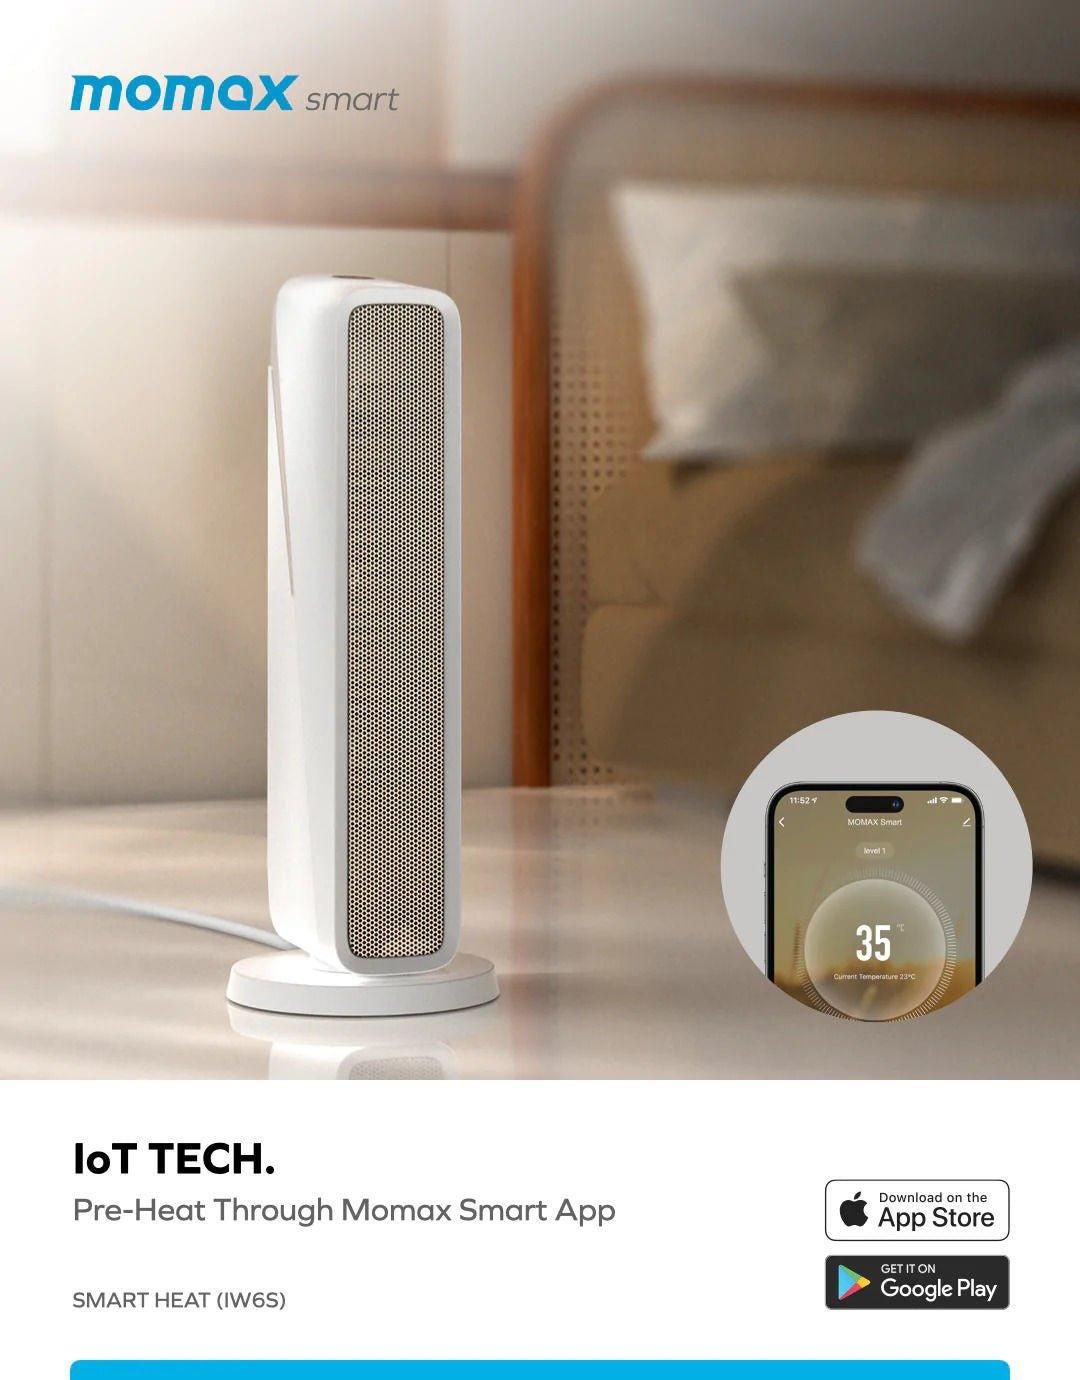 Momax Smart Heat IoT Medium space heater - White - Tech Goods